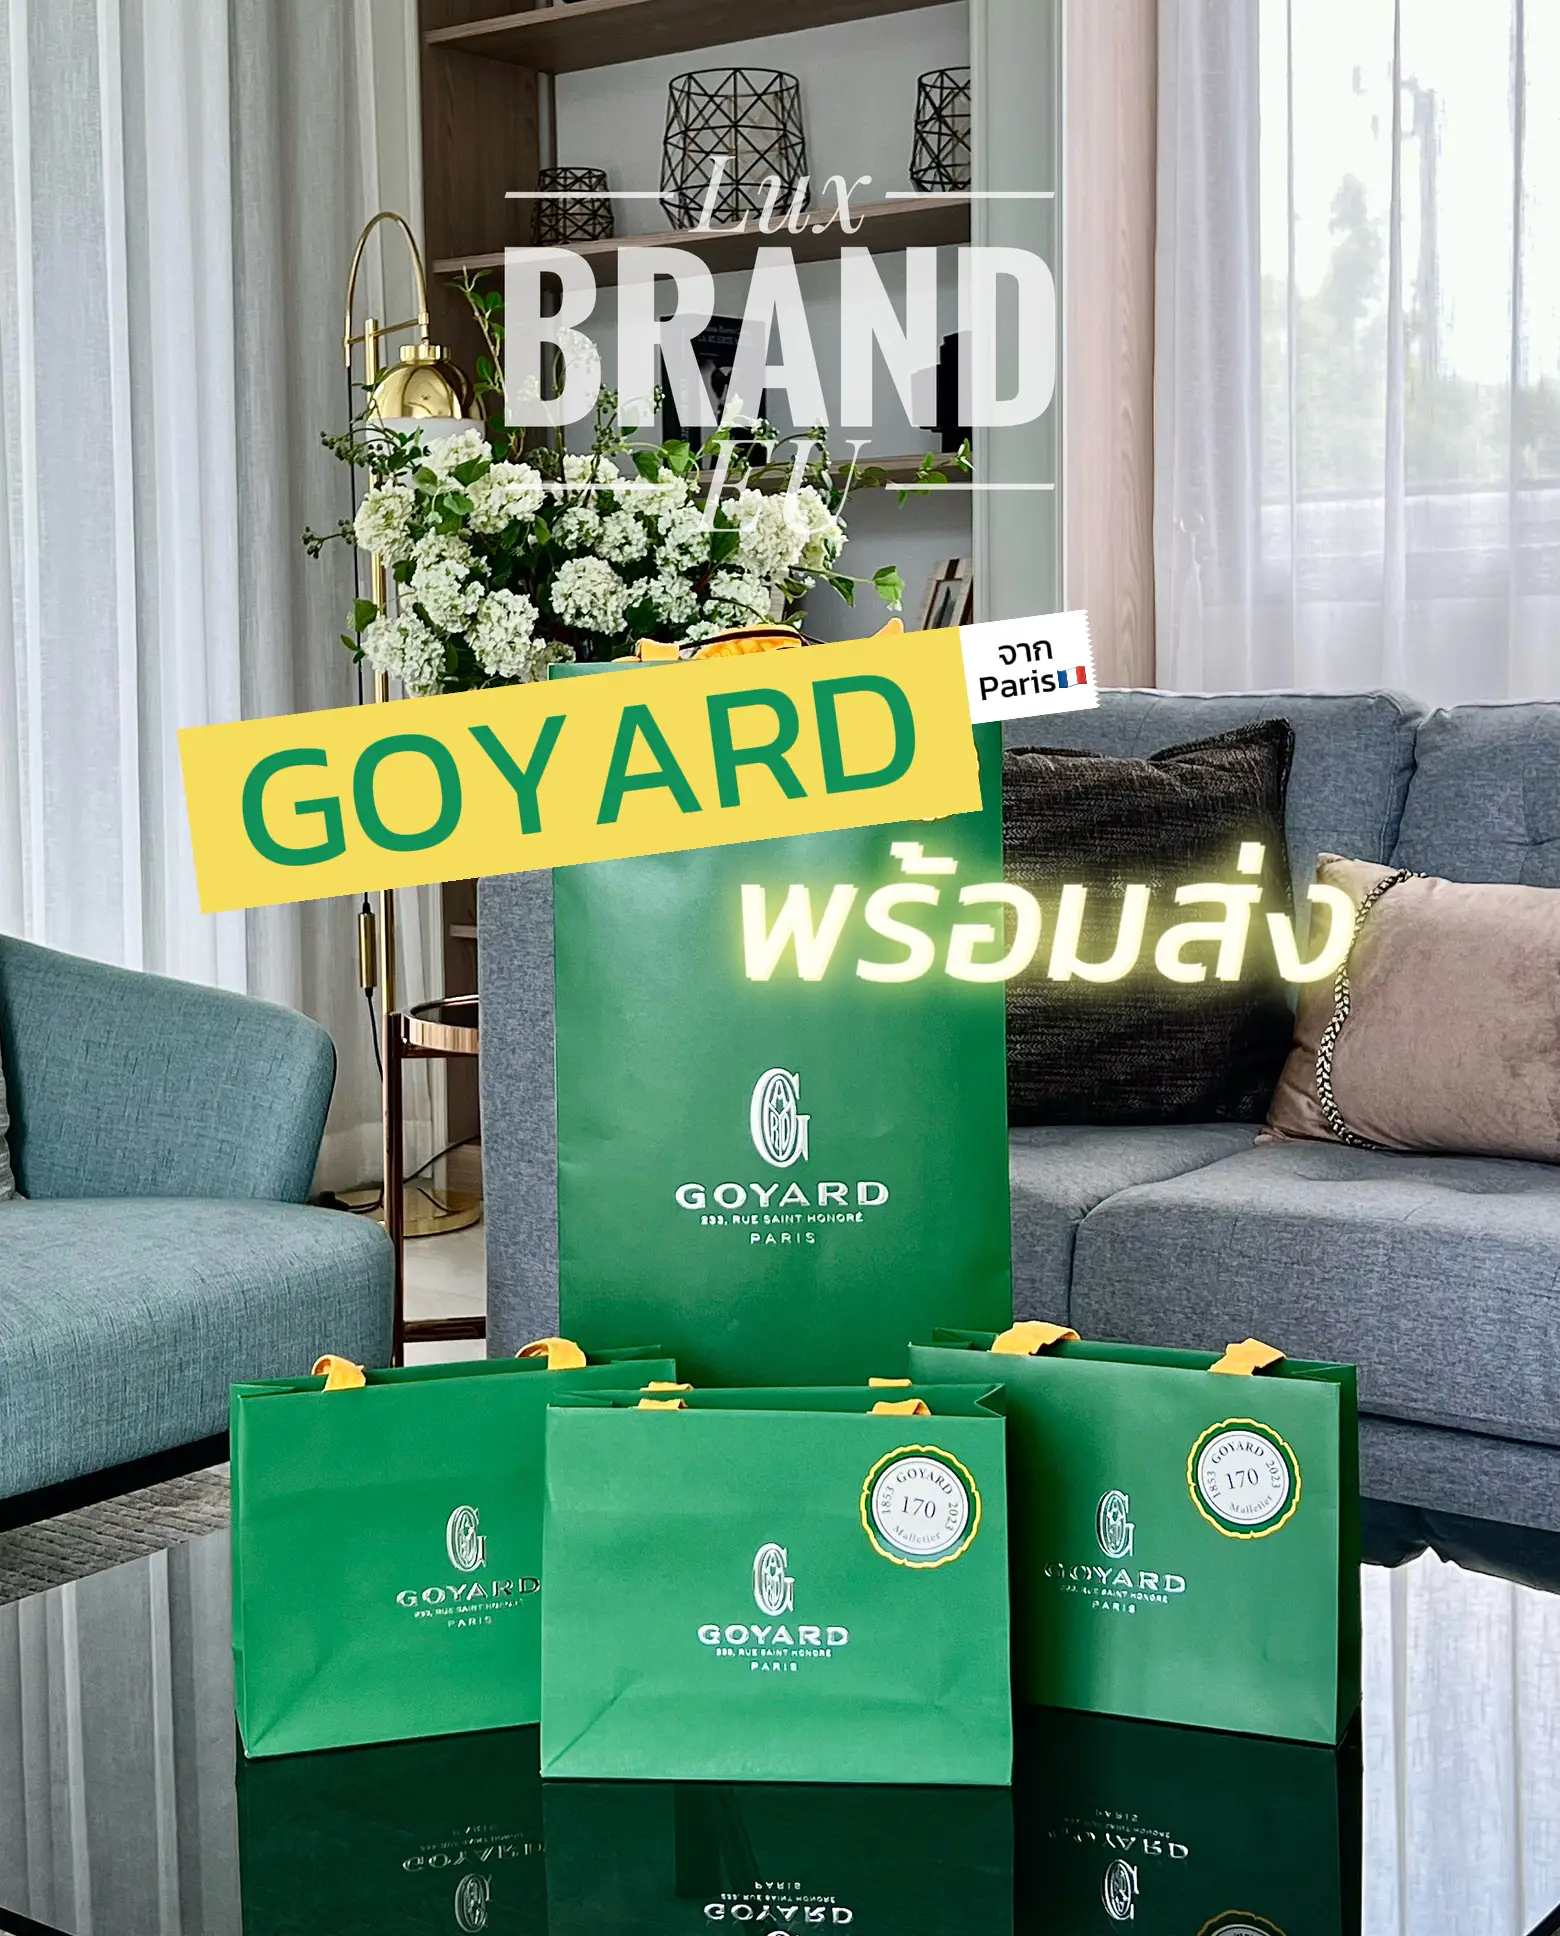 GOYARD | Gallery posted by Lux Brand EU | Lemon8